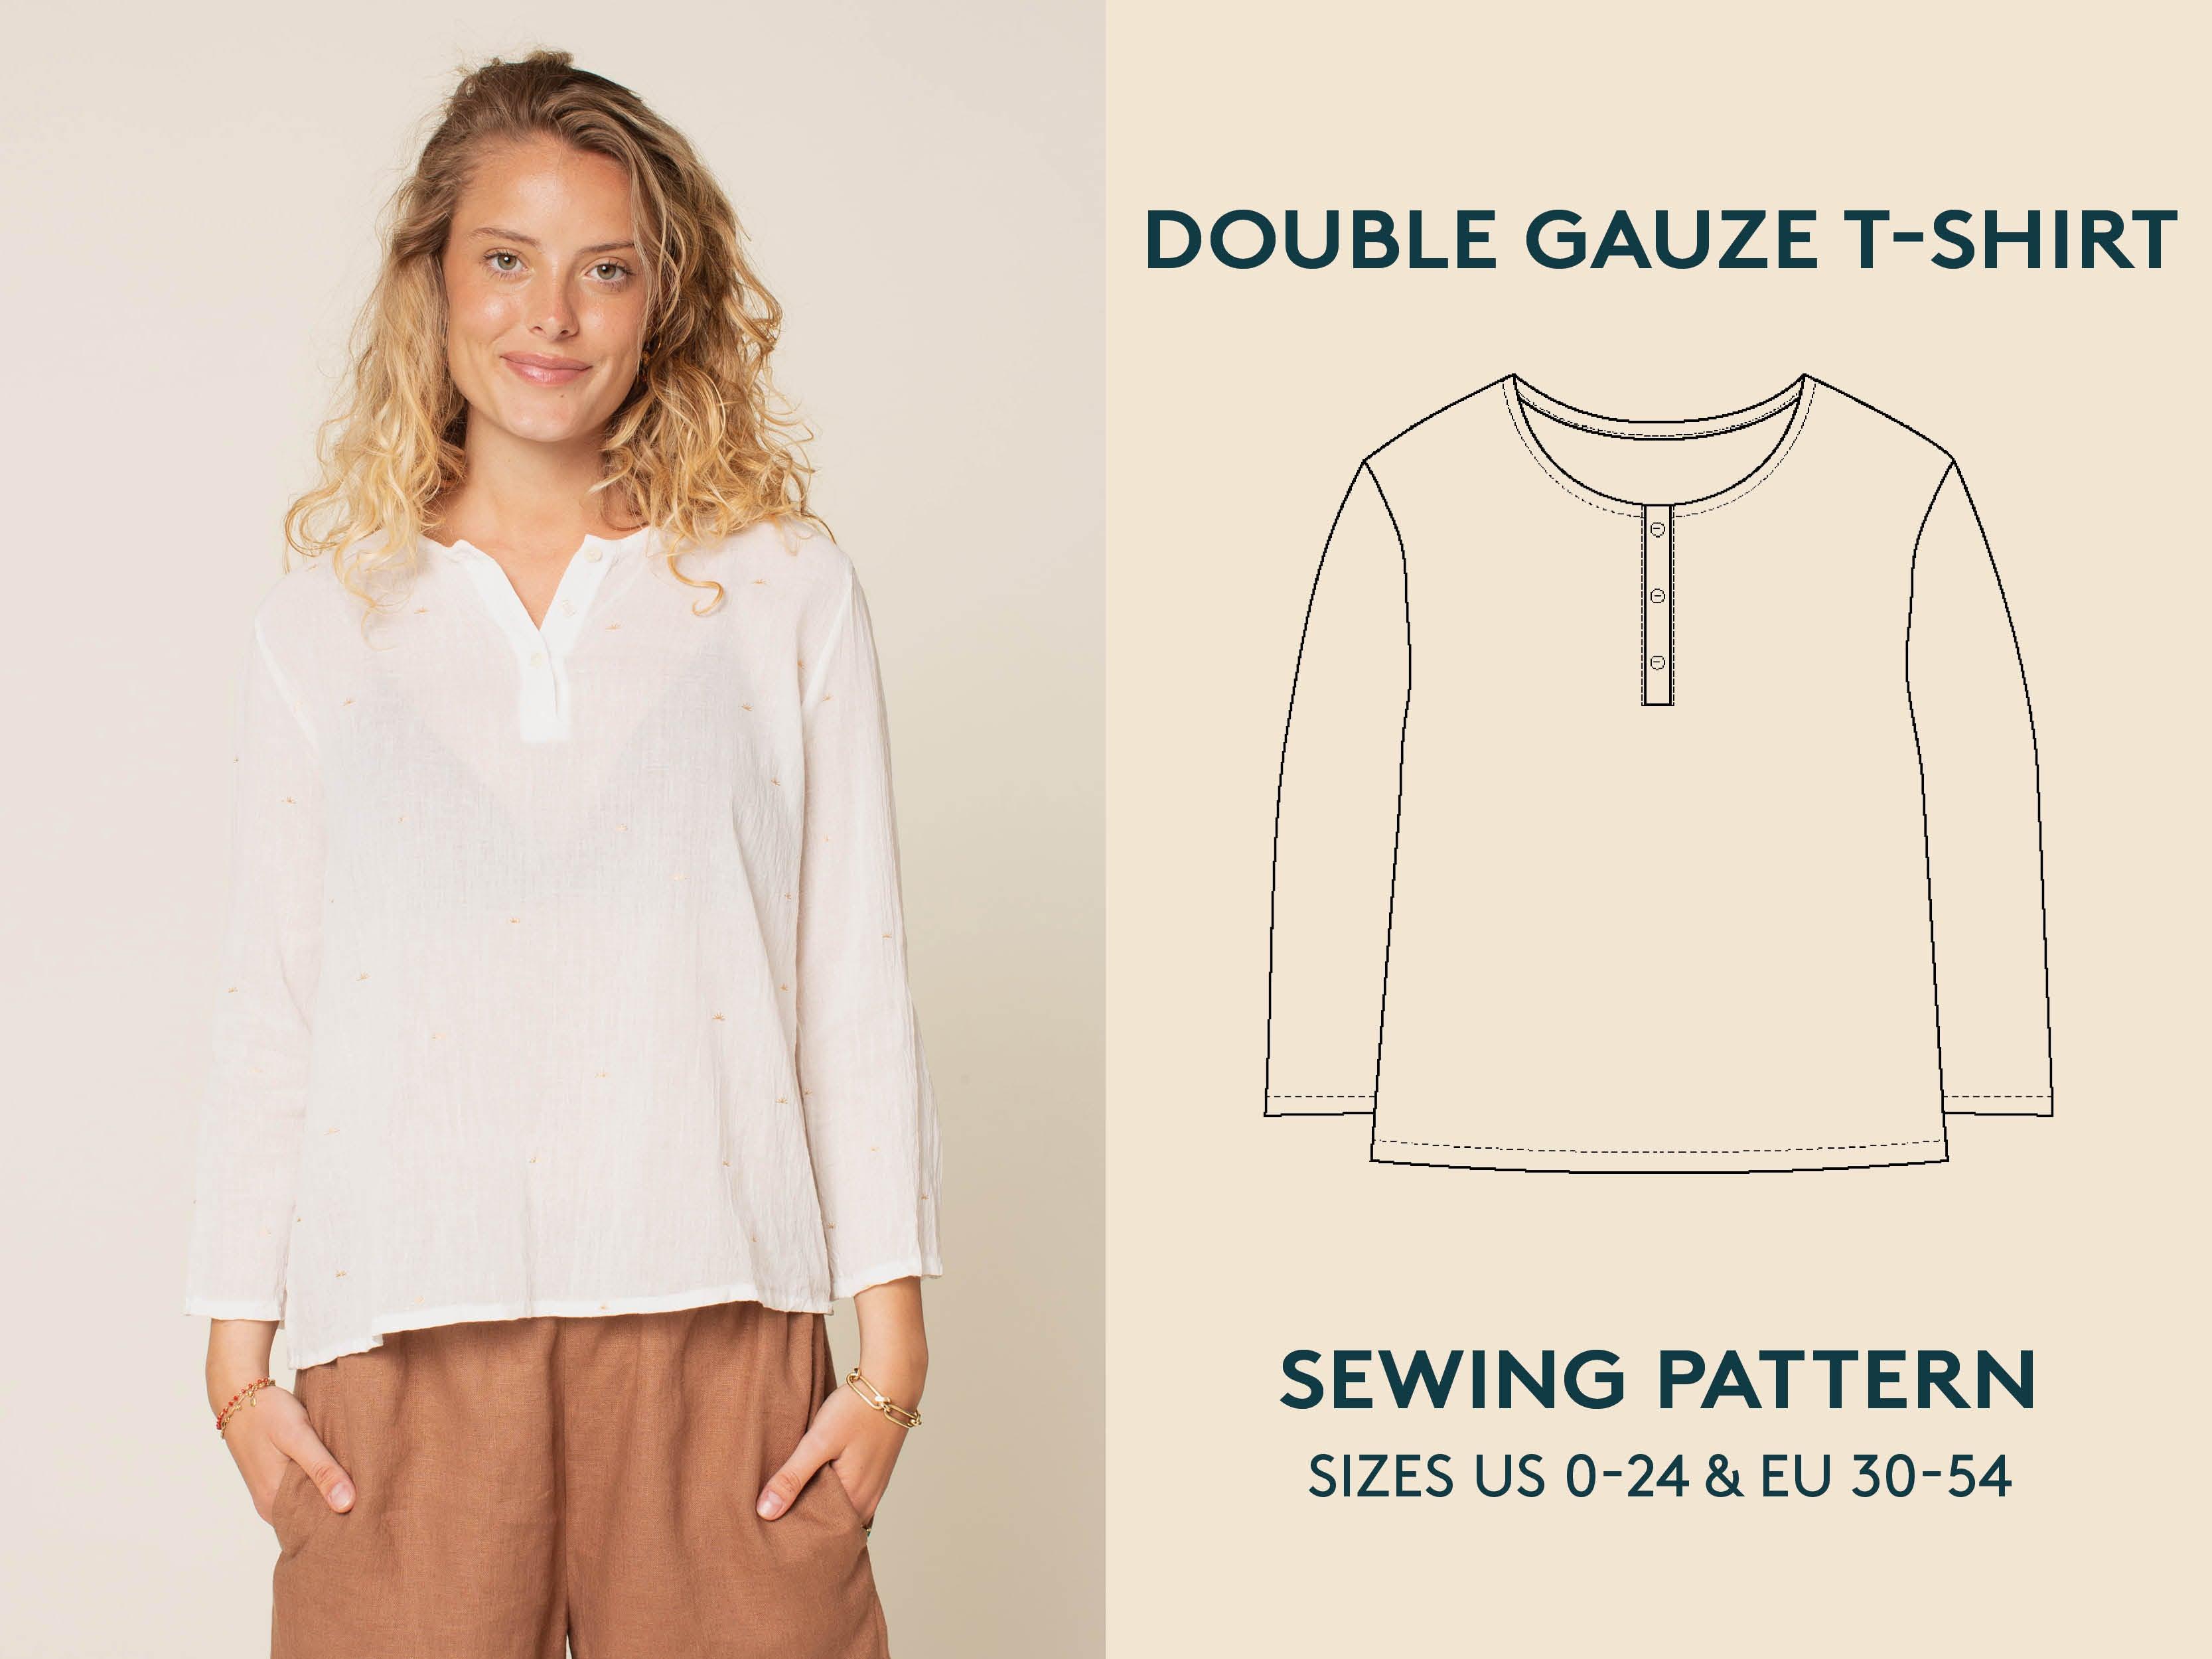 Double Gauze T-shirt sewing pattern